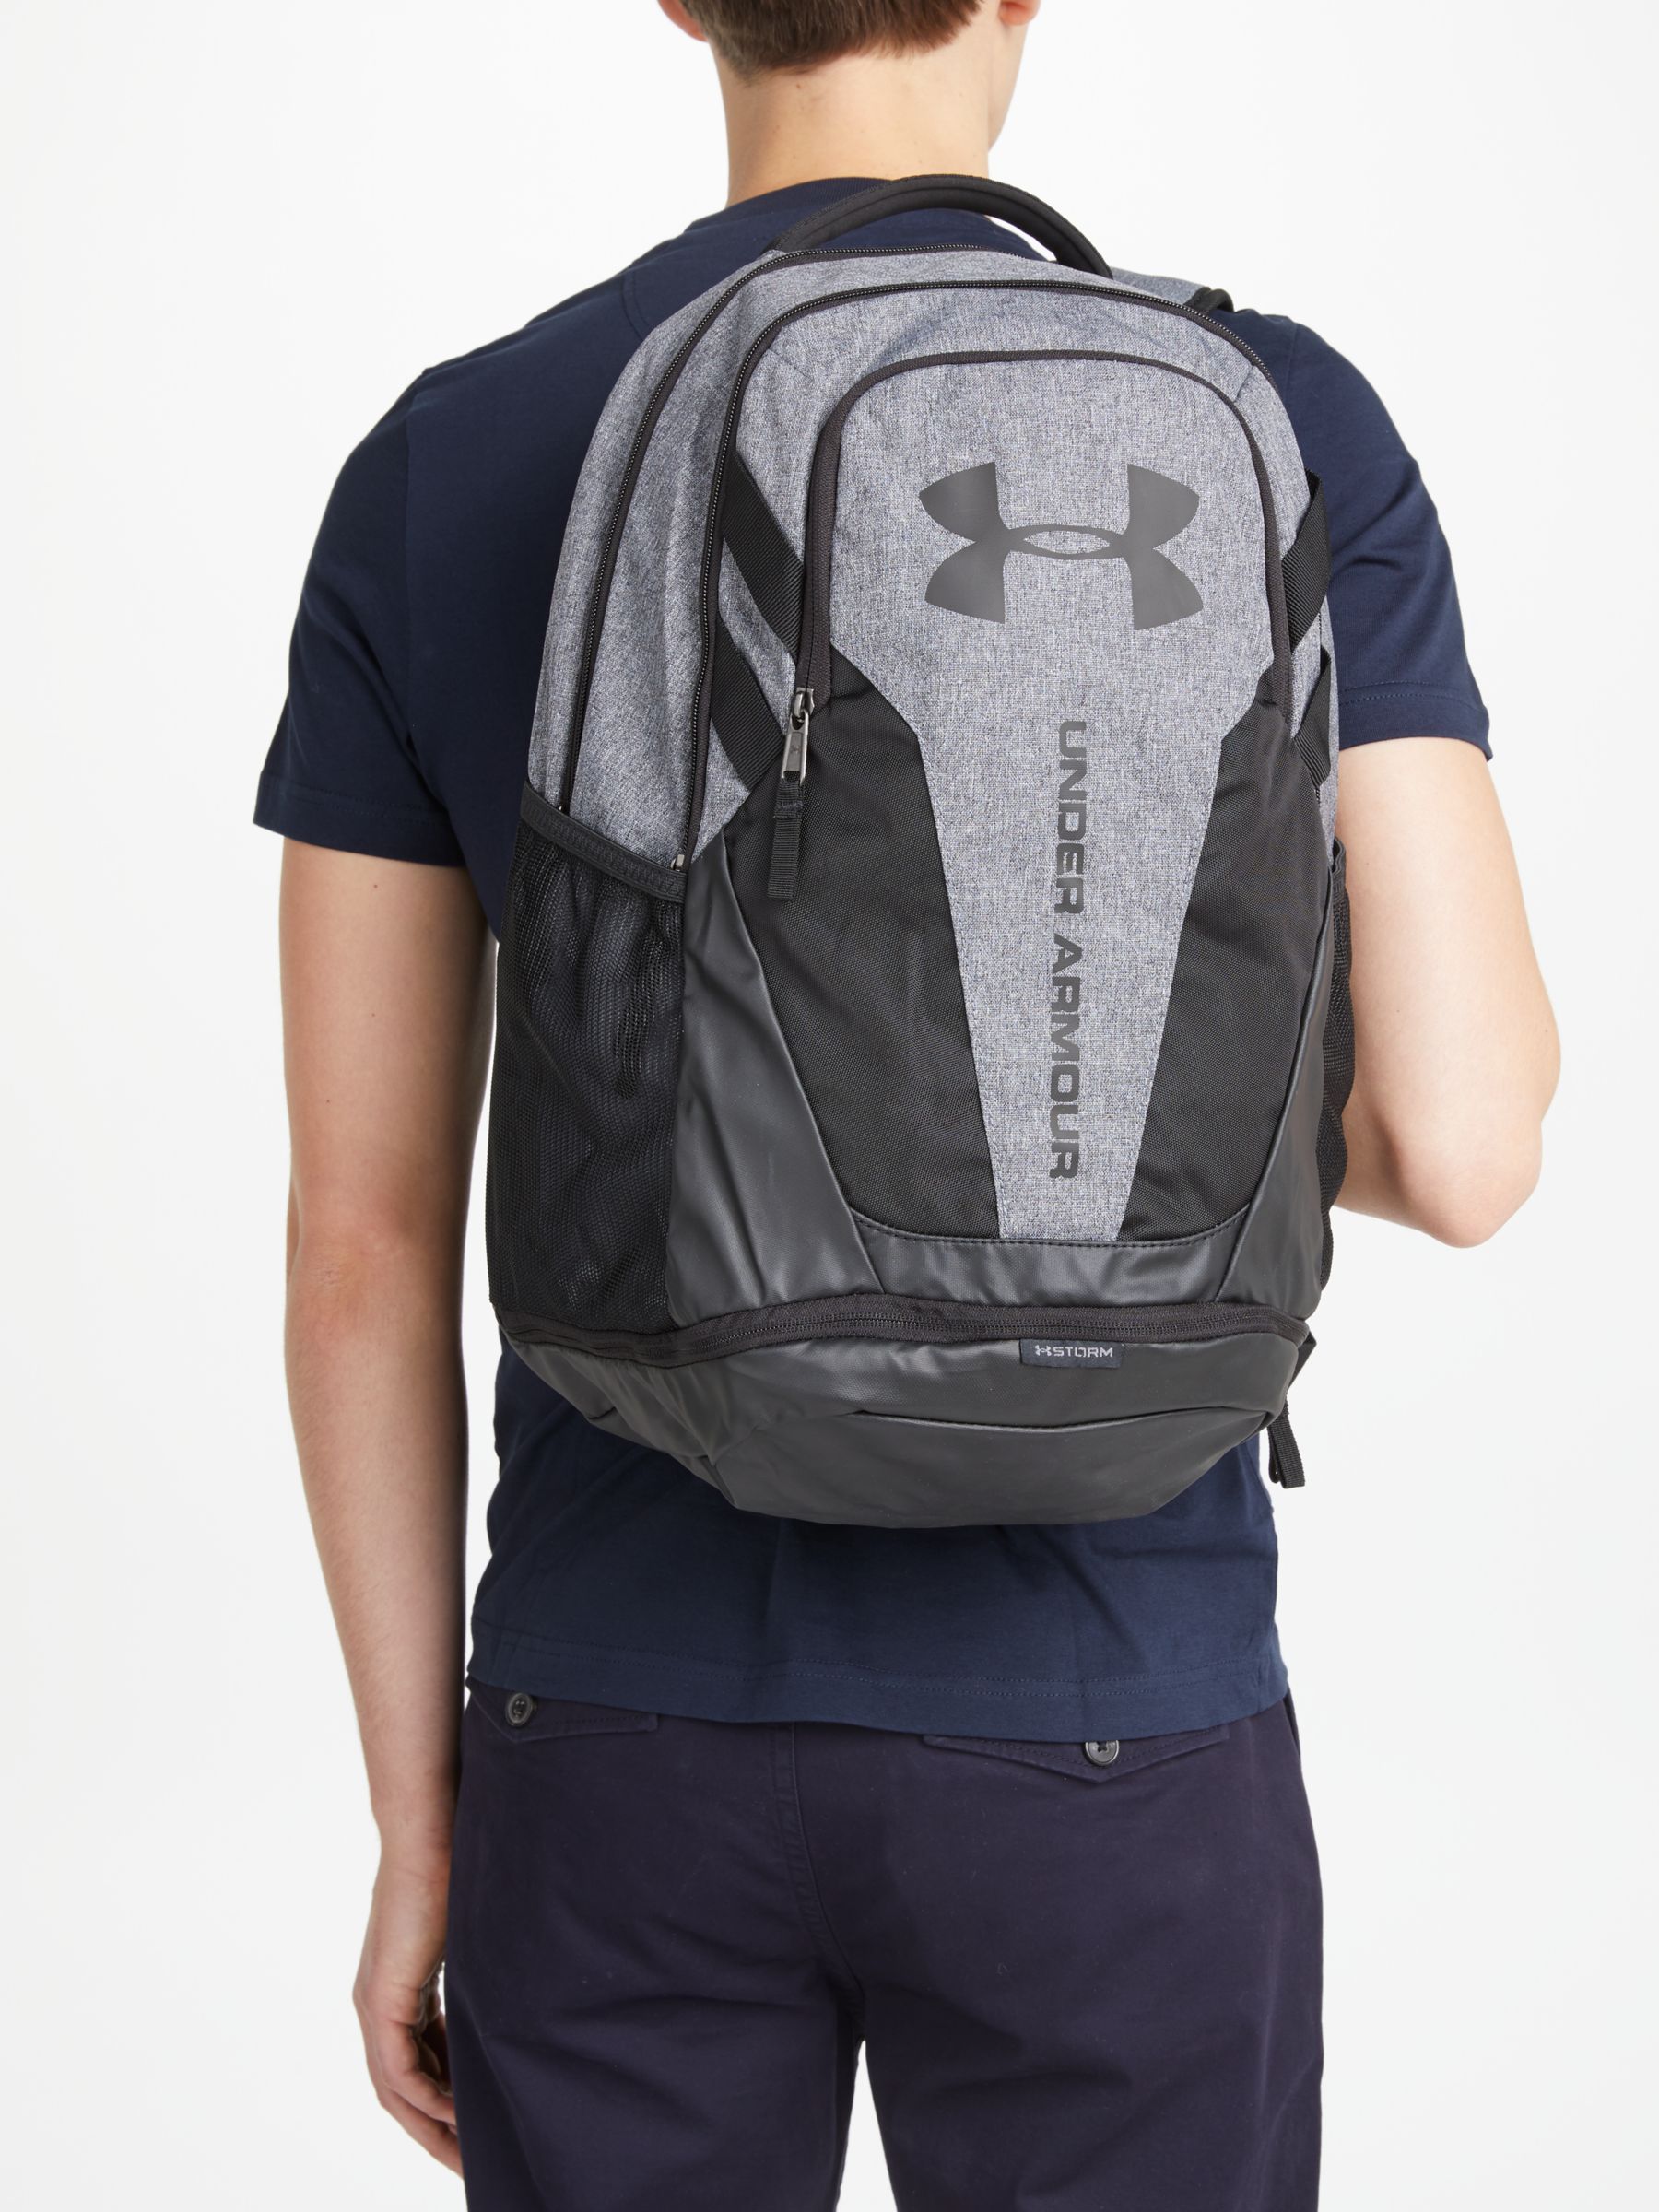 hustle 3.0 under armour backpack